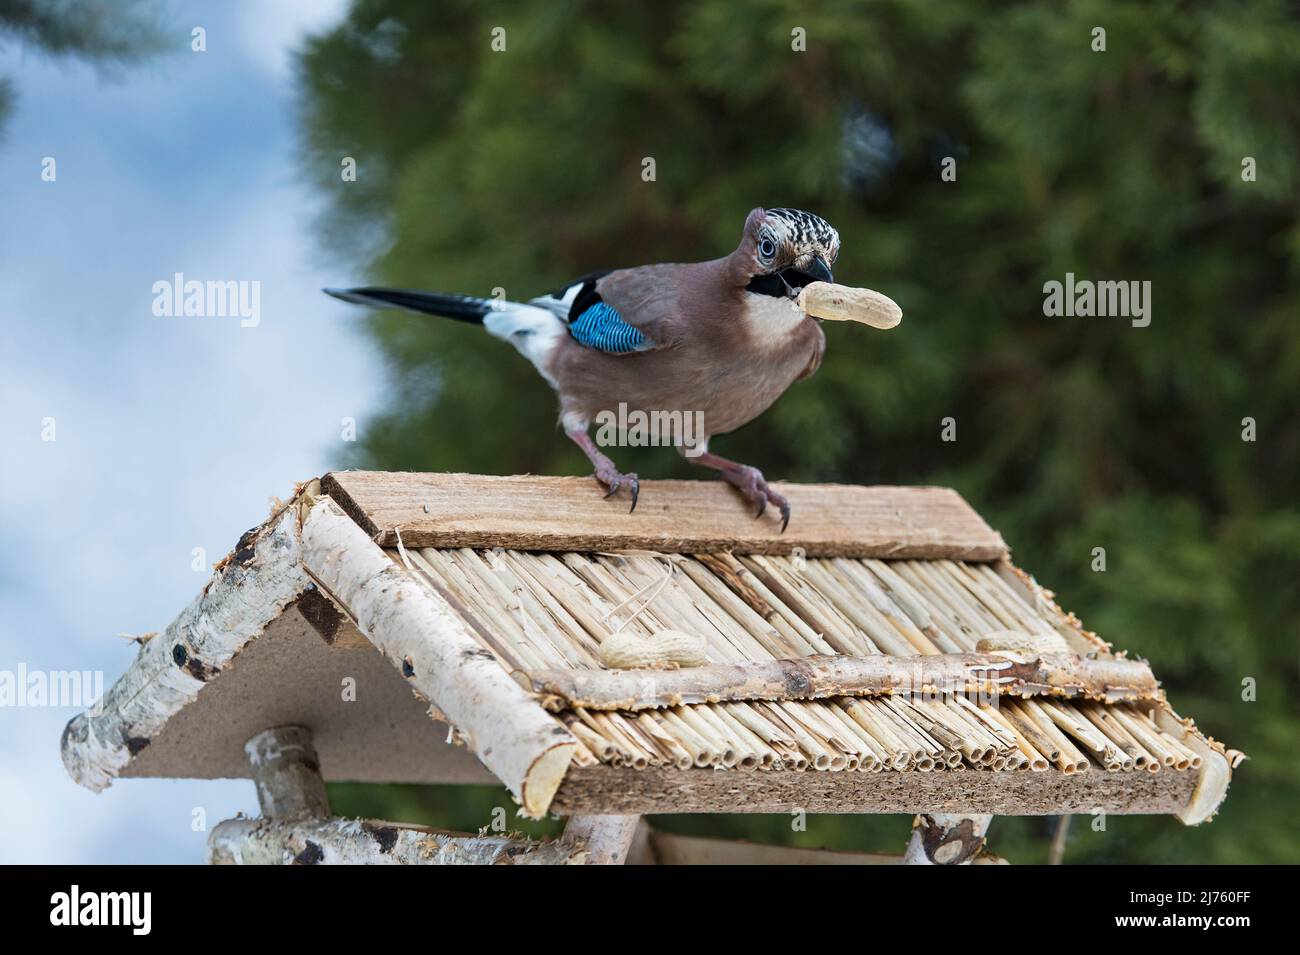 Jay (Garrulus glandarius) in winter at the bird feeder with a peanut in its beak, Ovronnaz, Valais, Switzerland Stock Photo